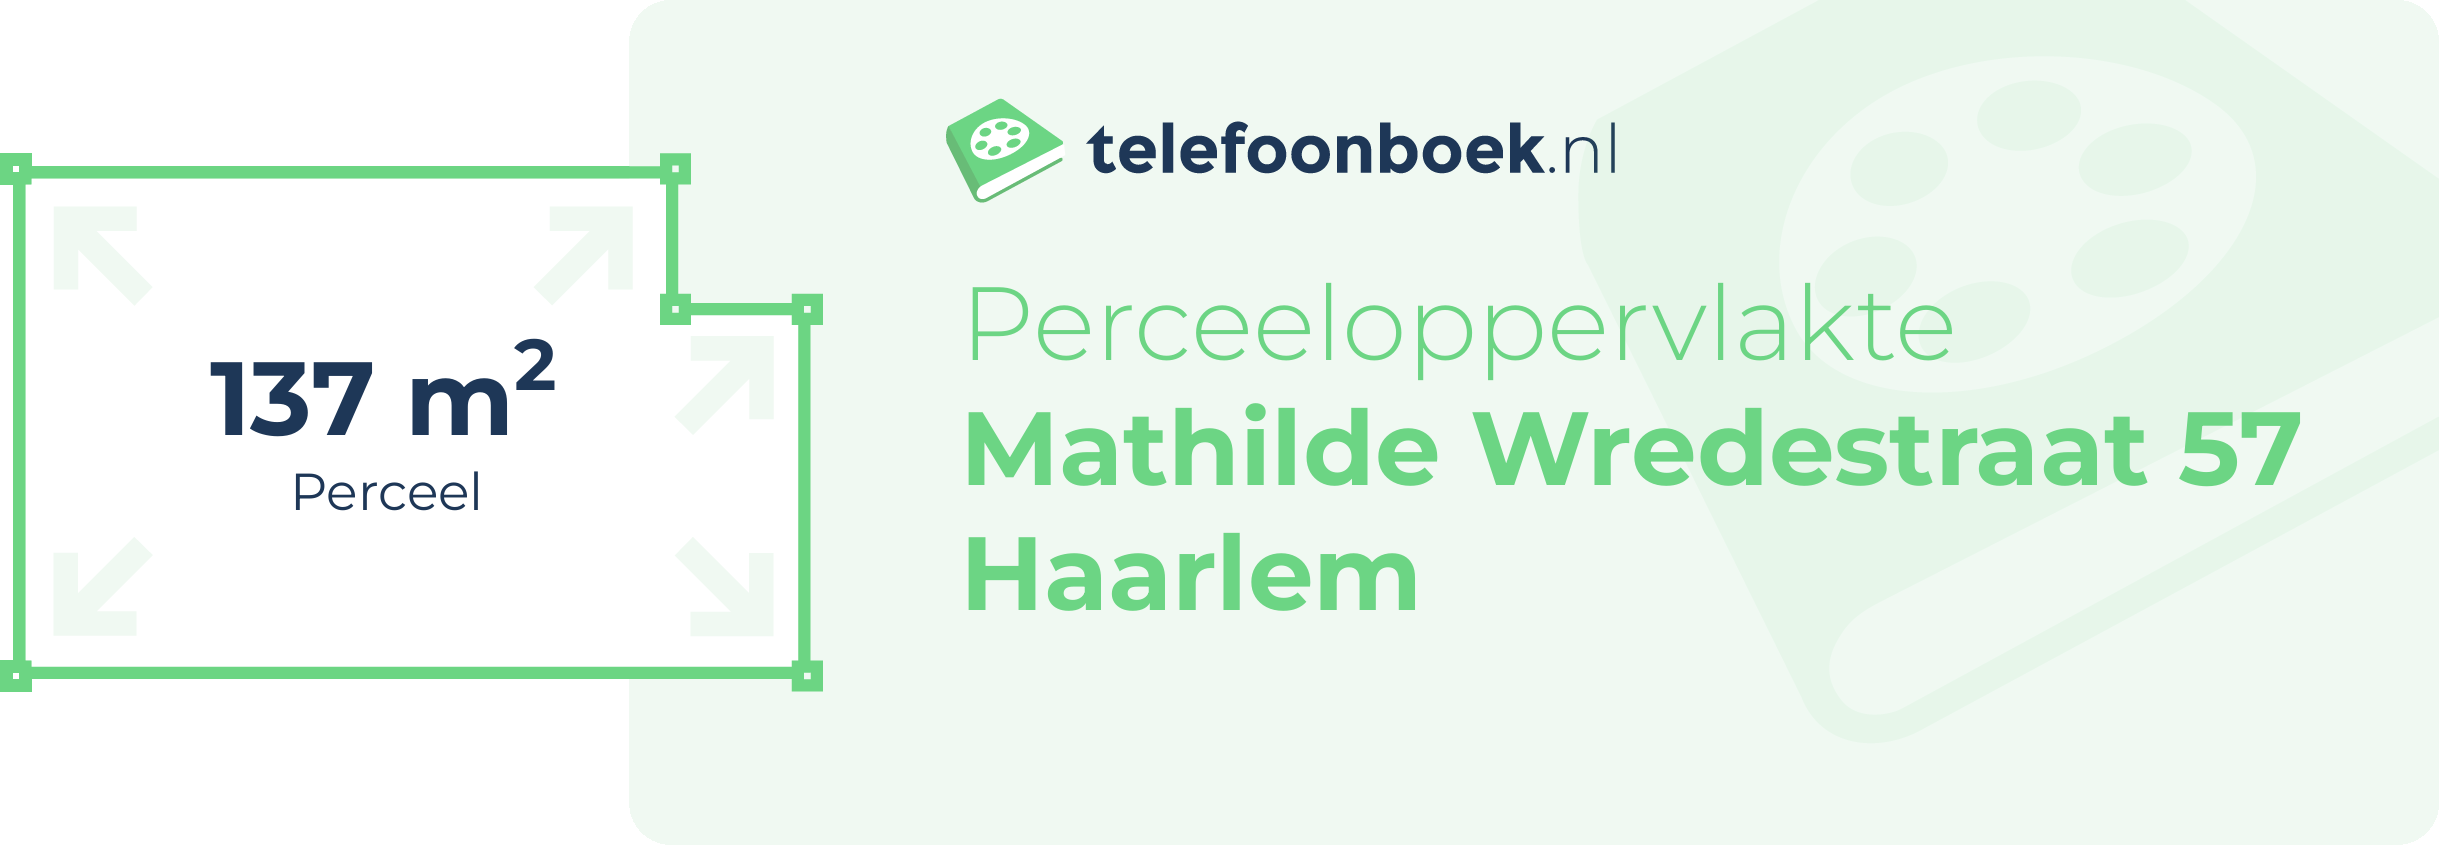 Perceeloppervlakte Mathilde Wredestraat 57 Haarlem